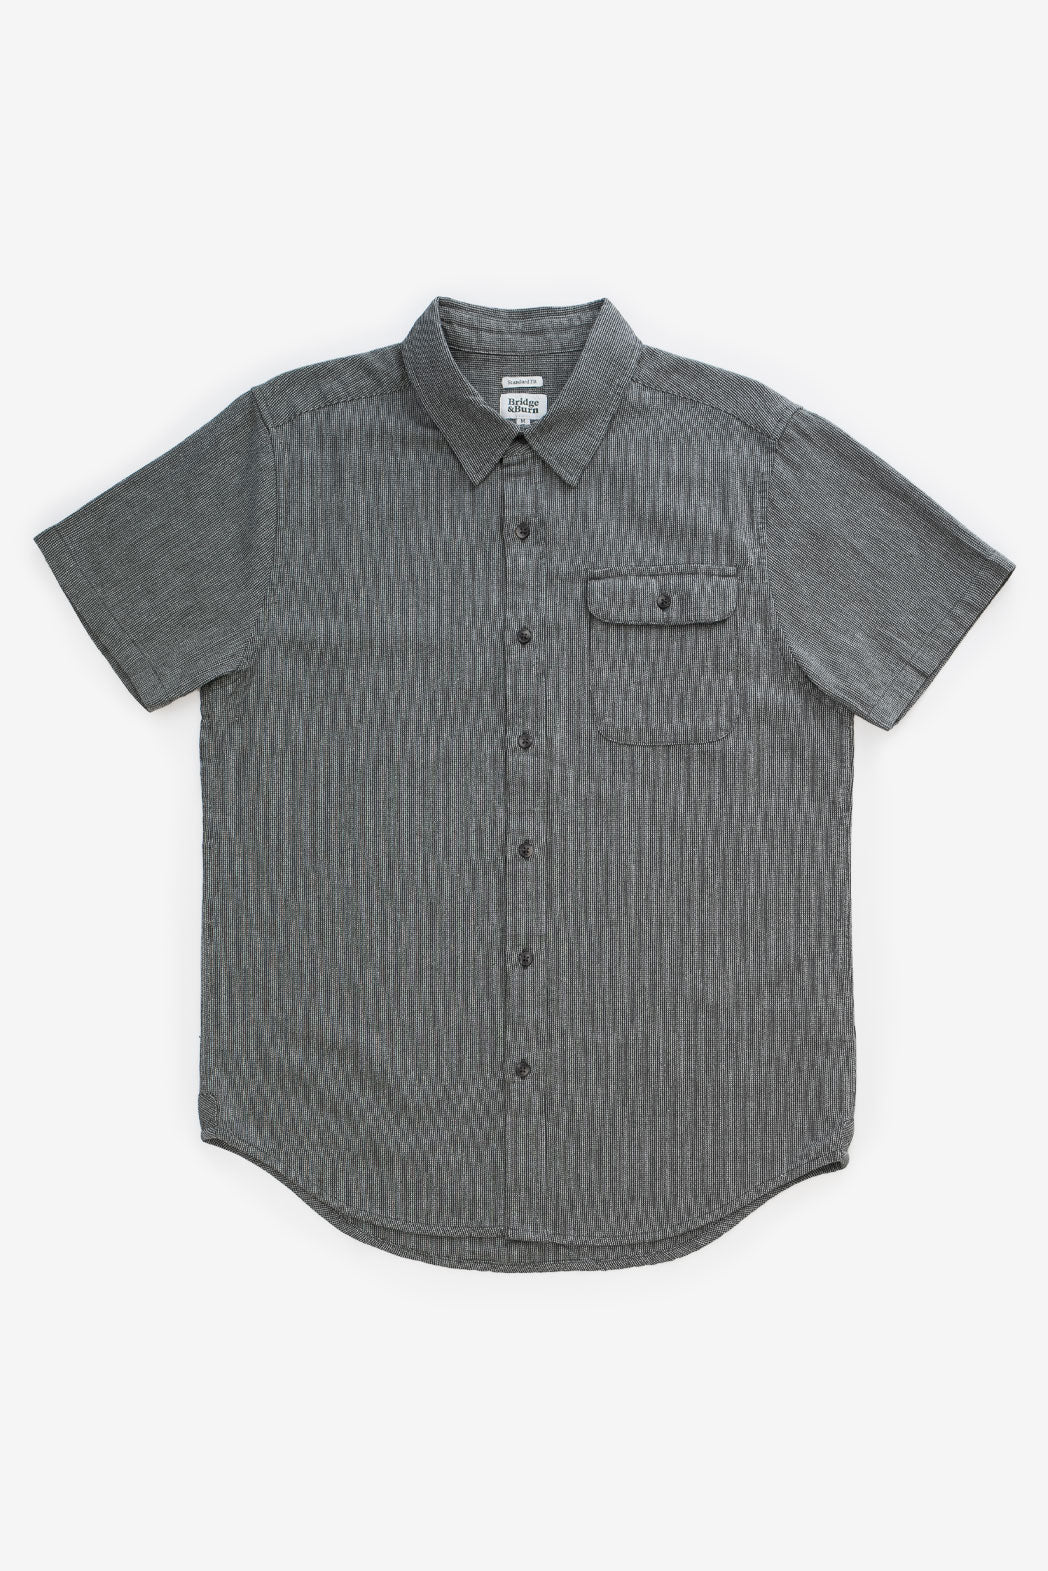 Best Short Sleeve Shirts for Summer – Bridge & Burn